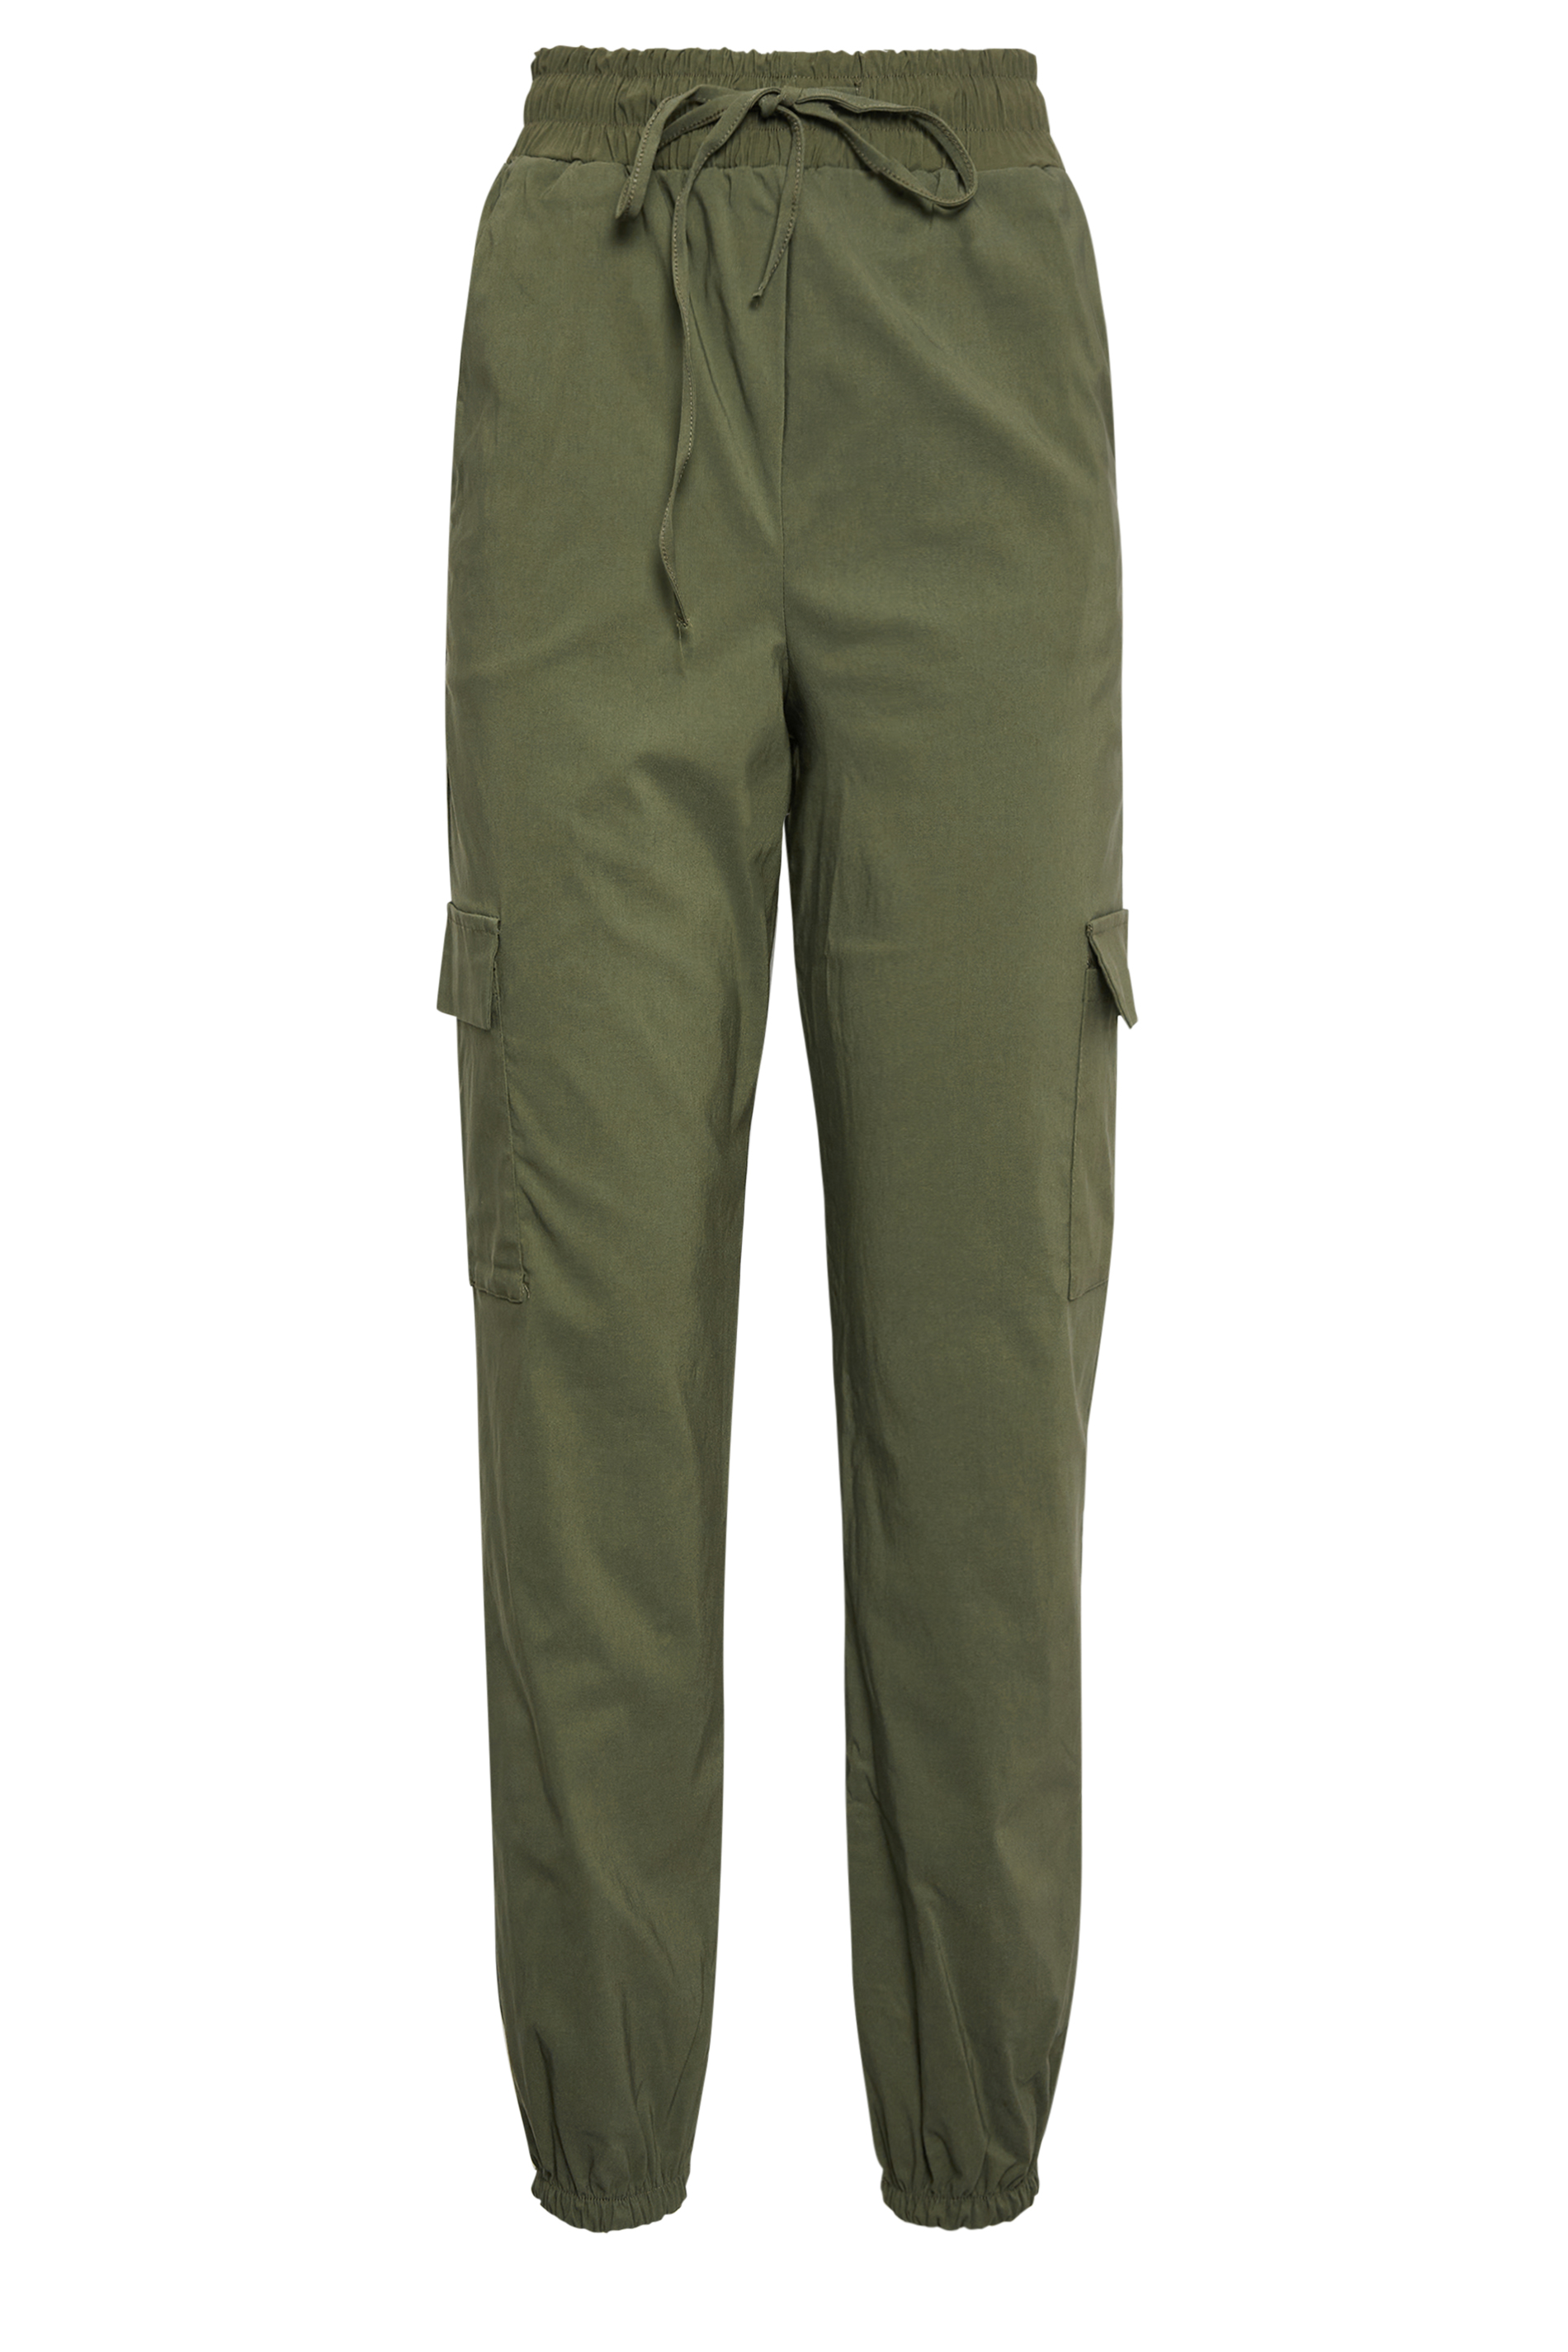 LTS Tall Khaki Green Pull On Cargo Trousers | Long Tall Sally